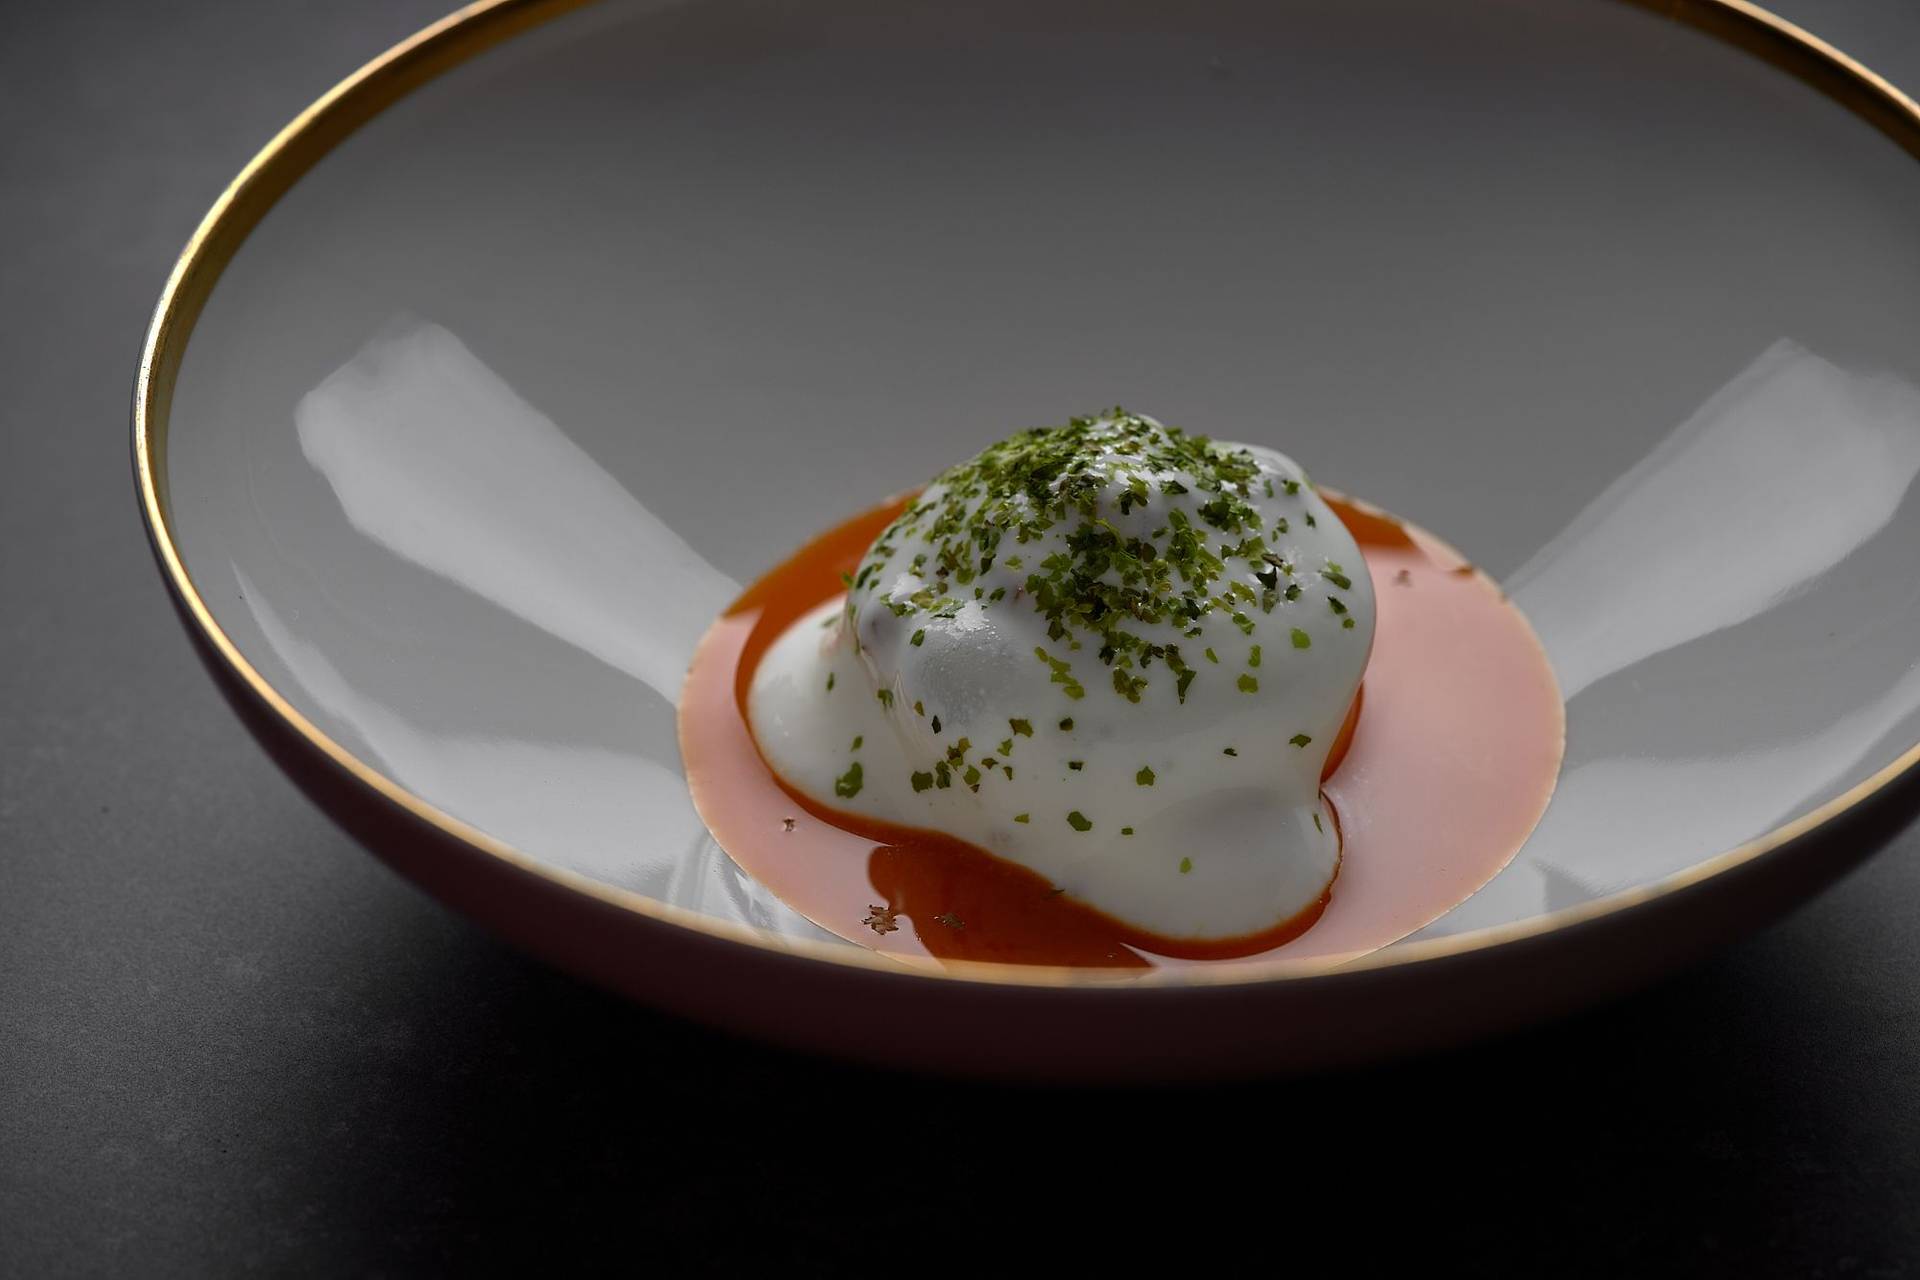 sea buckthorn matcha carrot and yoghurt by food stylist ben donath at le duc salon